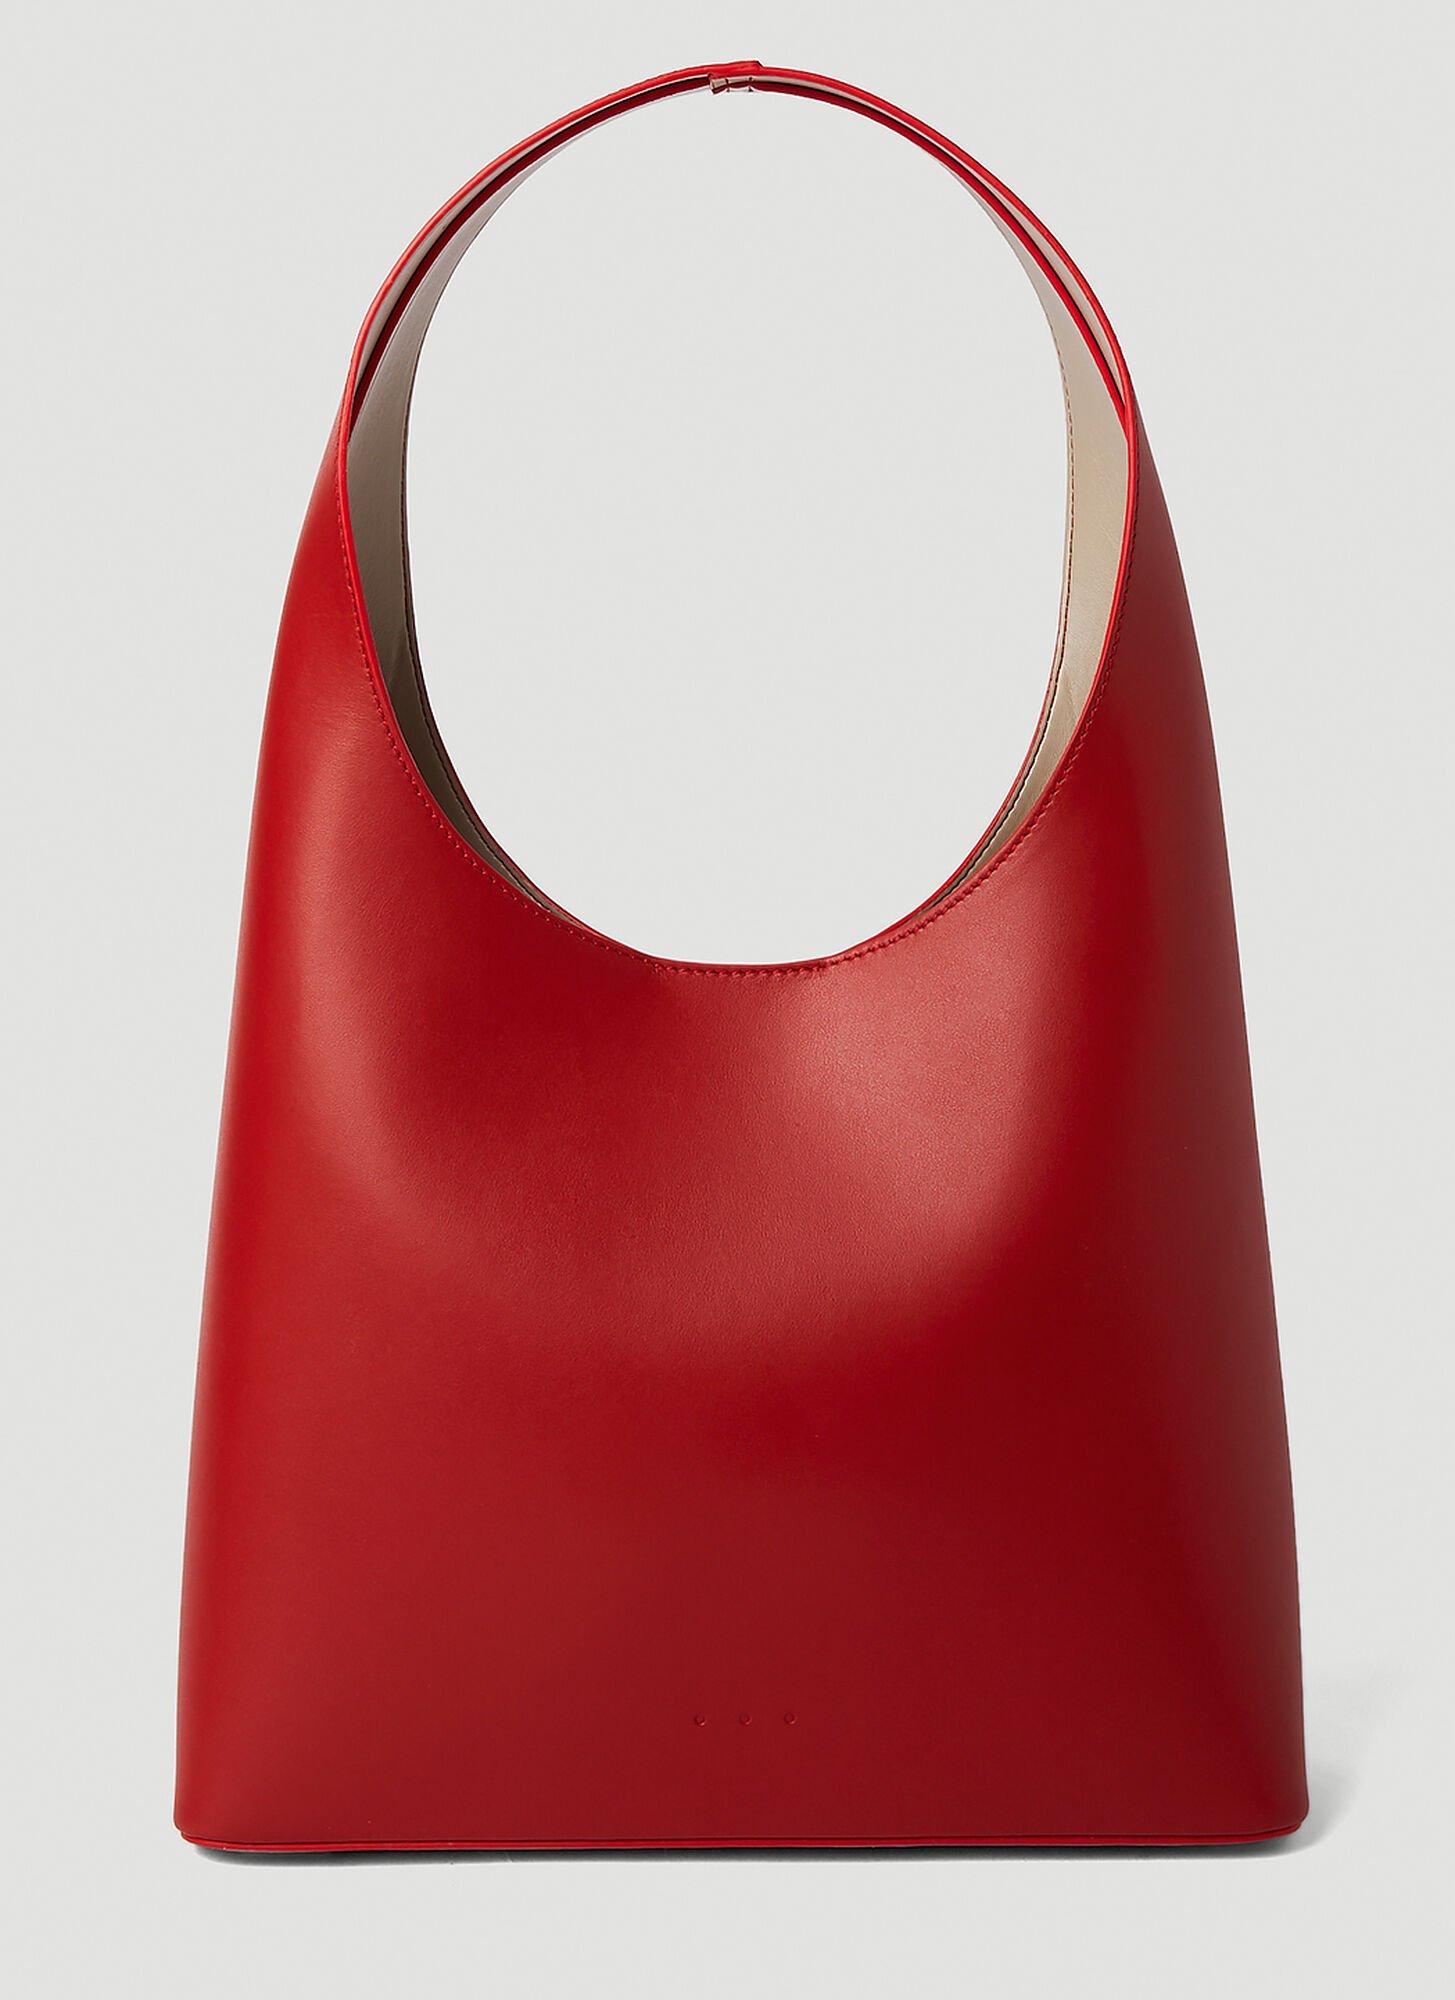 Aesther Ekme Sac Midi Shoulder Bag in Red